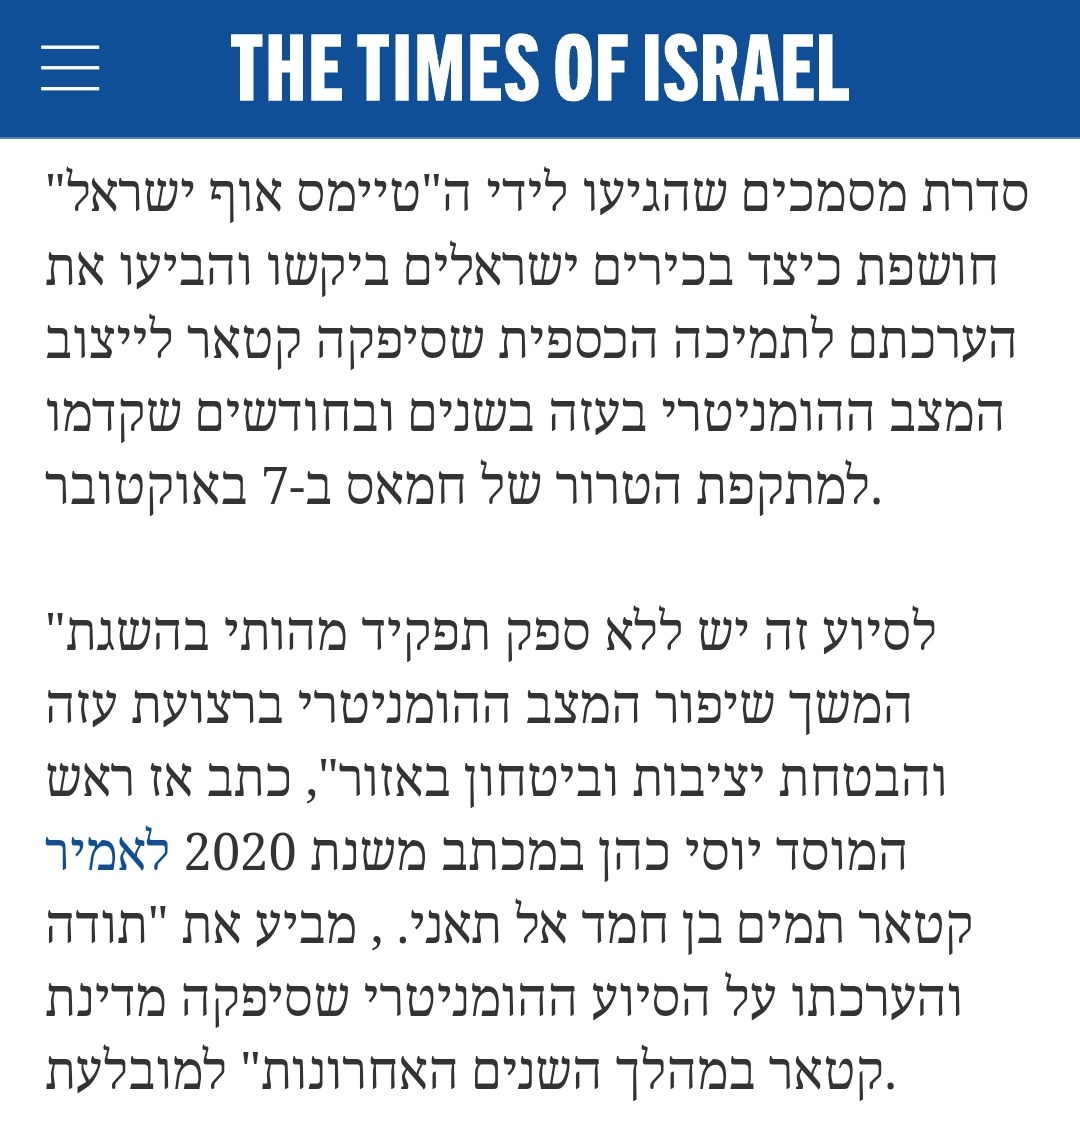 @yaronavraham חשיפה זה לא, מקסימום פרסם שני, טיימס אוף ישראל פרסמו לפני יותר מחודש, מי שפרסם זה @JacobMagid